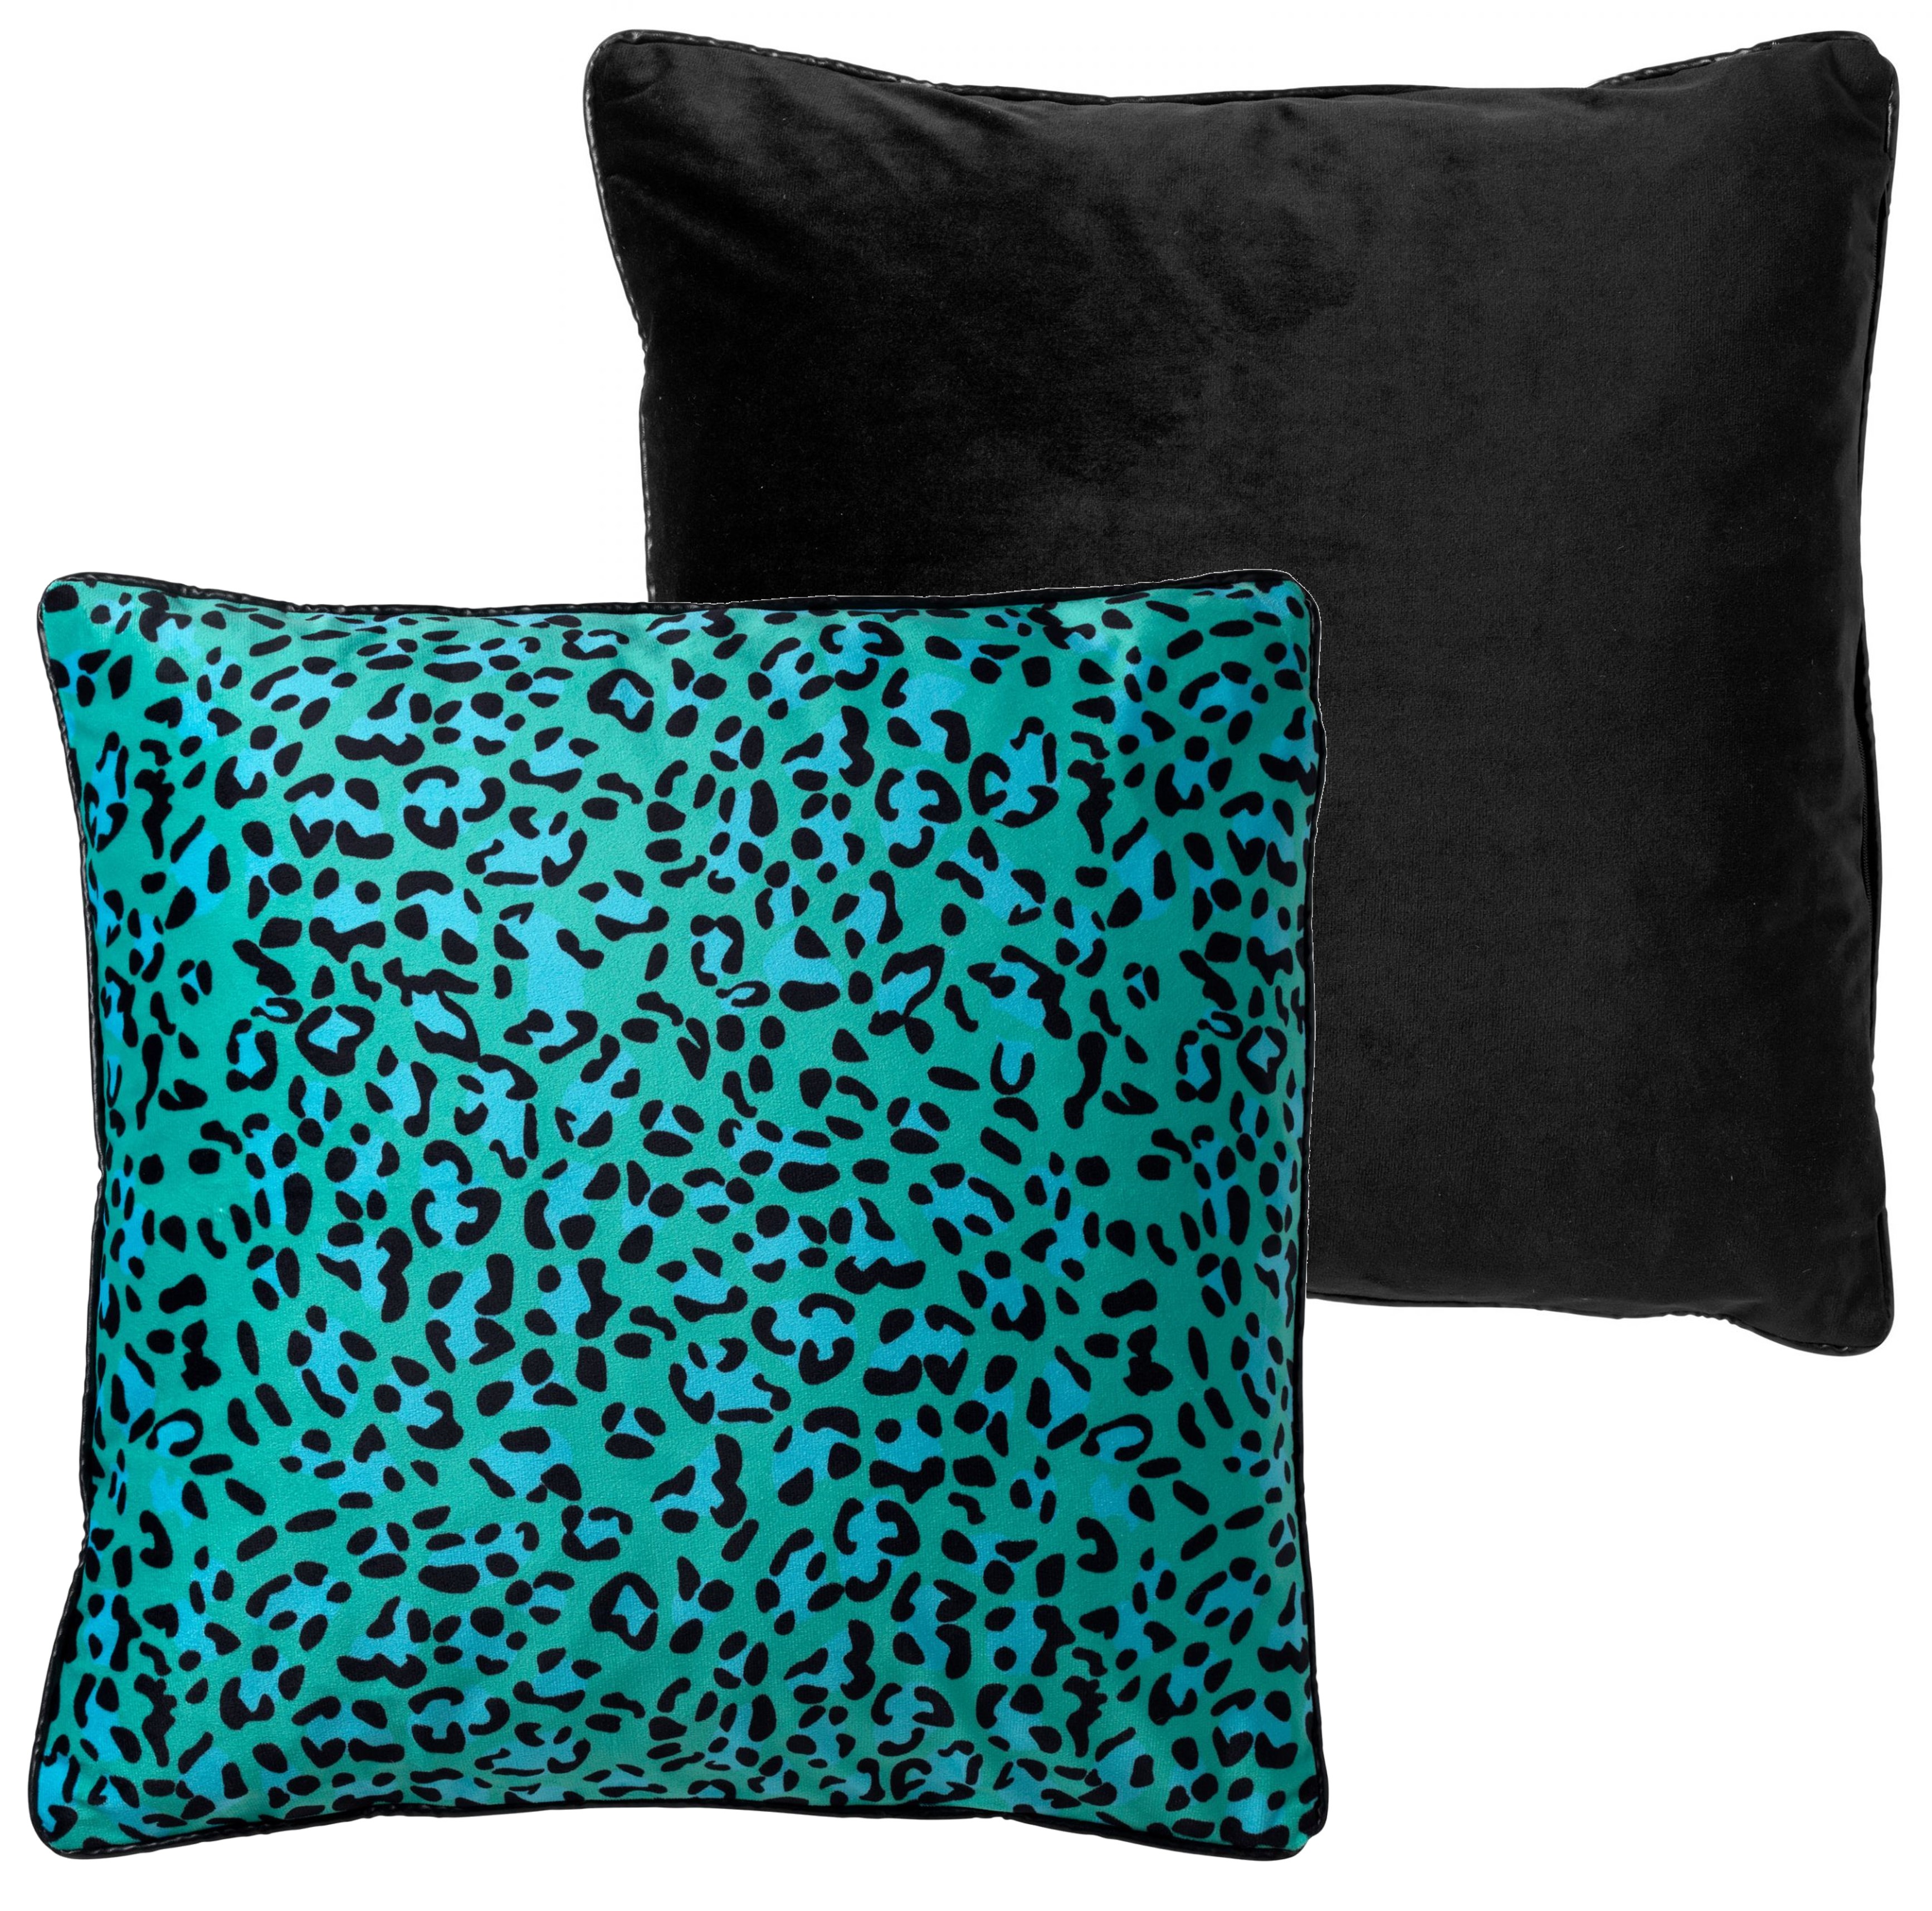 BENDT - Sierkussen 45x45 cm - spearmint - groen - blauw - zwart - luipaard patroon - velvet stof